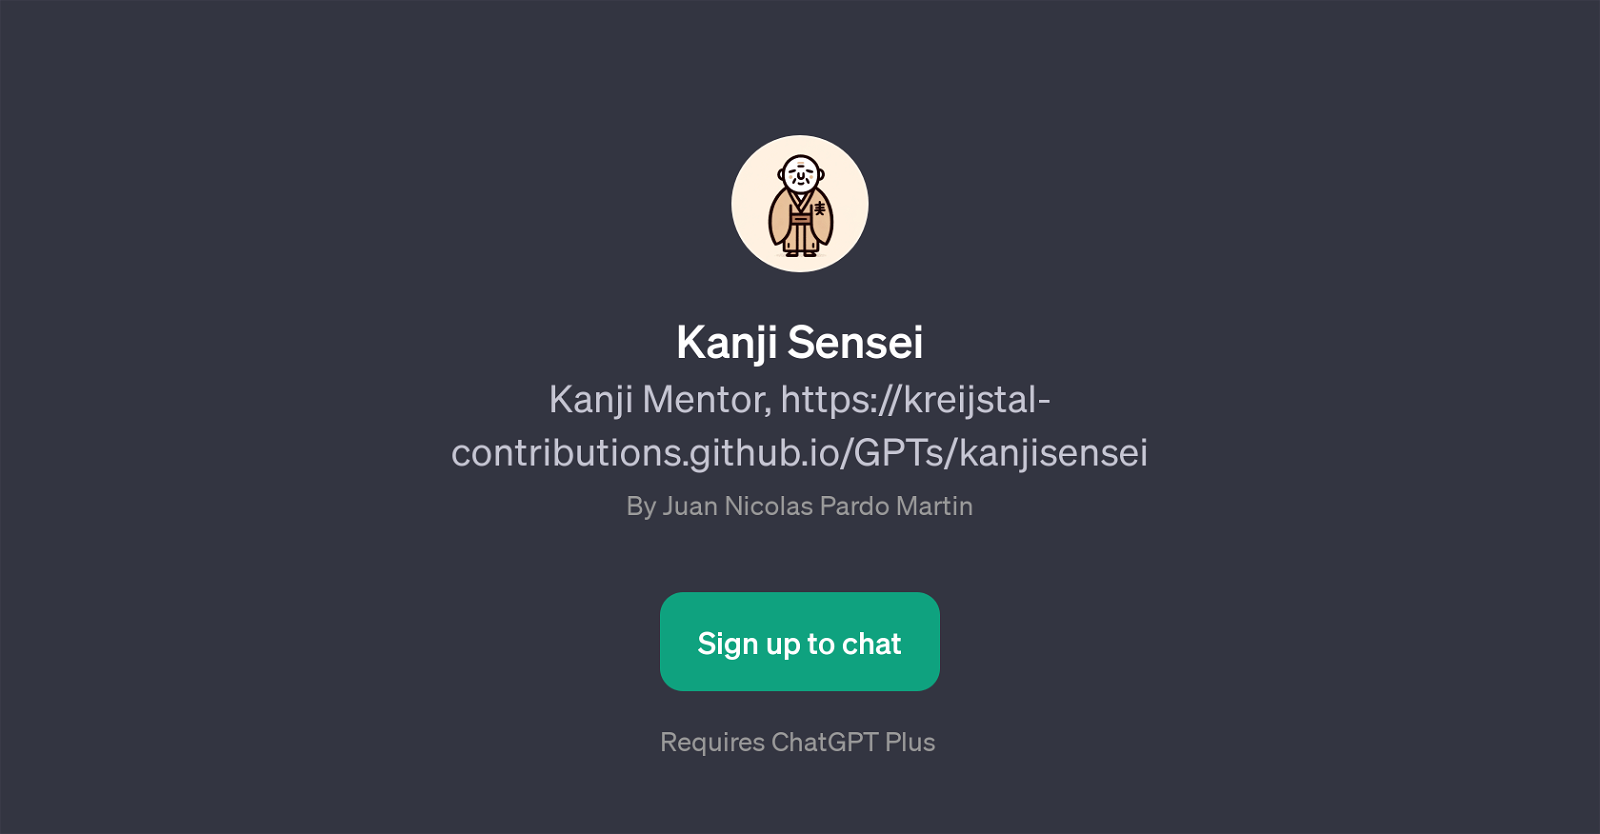 Kanji Sensei website